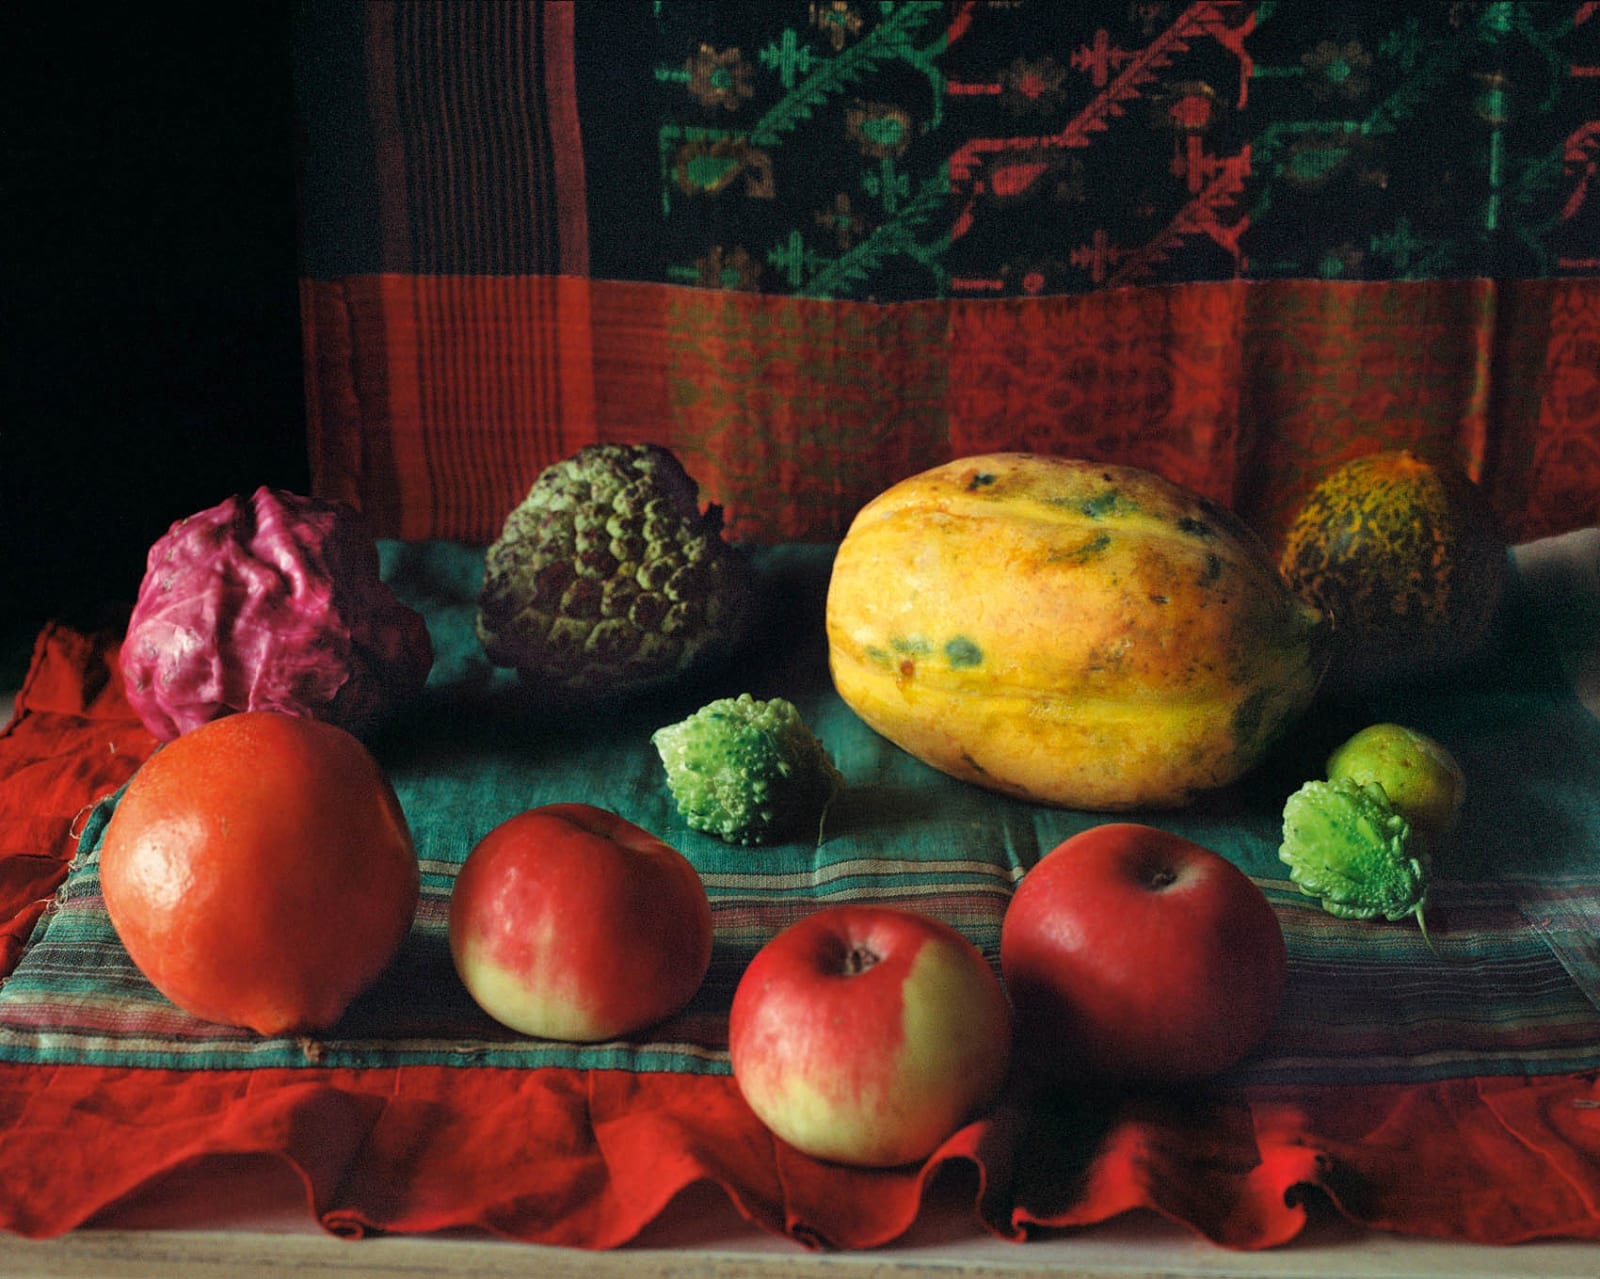 Patrick Faigenbaum Arrangement de fruits. Dover Lane, Ballygunge, Kolkata sud (2), octobre 2014 Inkjet pigment print, 2015 Framed : 55,5 x 69 x 3,5 cm Edition of 4 + 1 AP